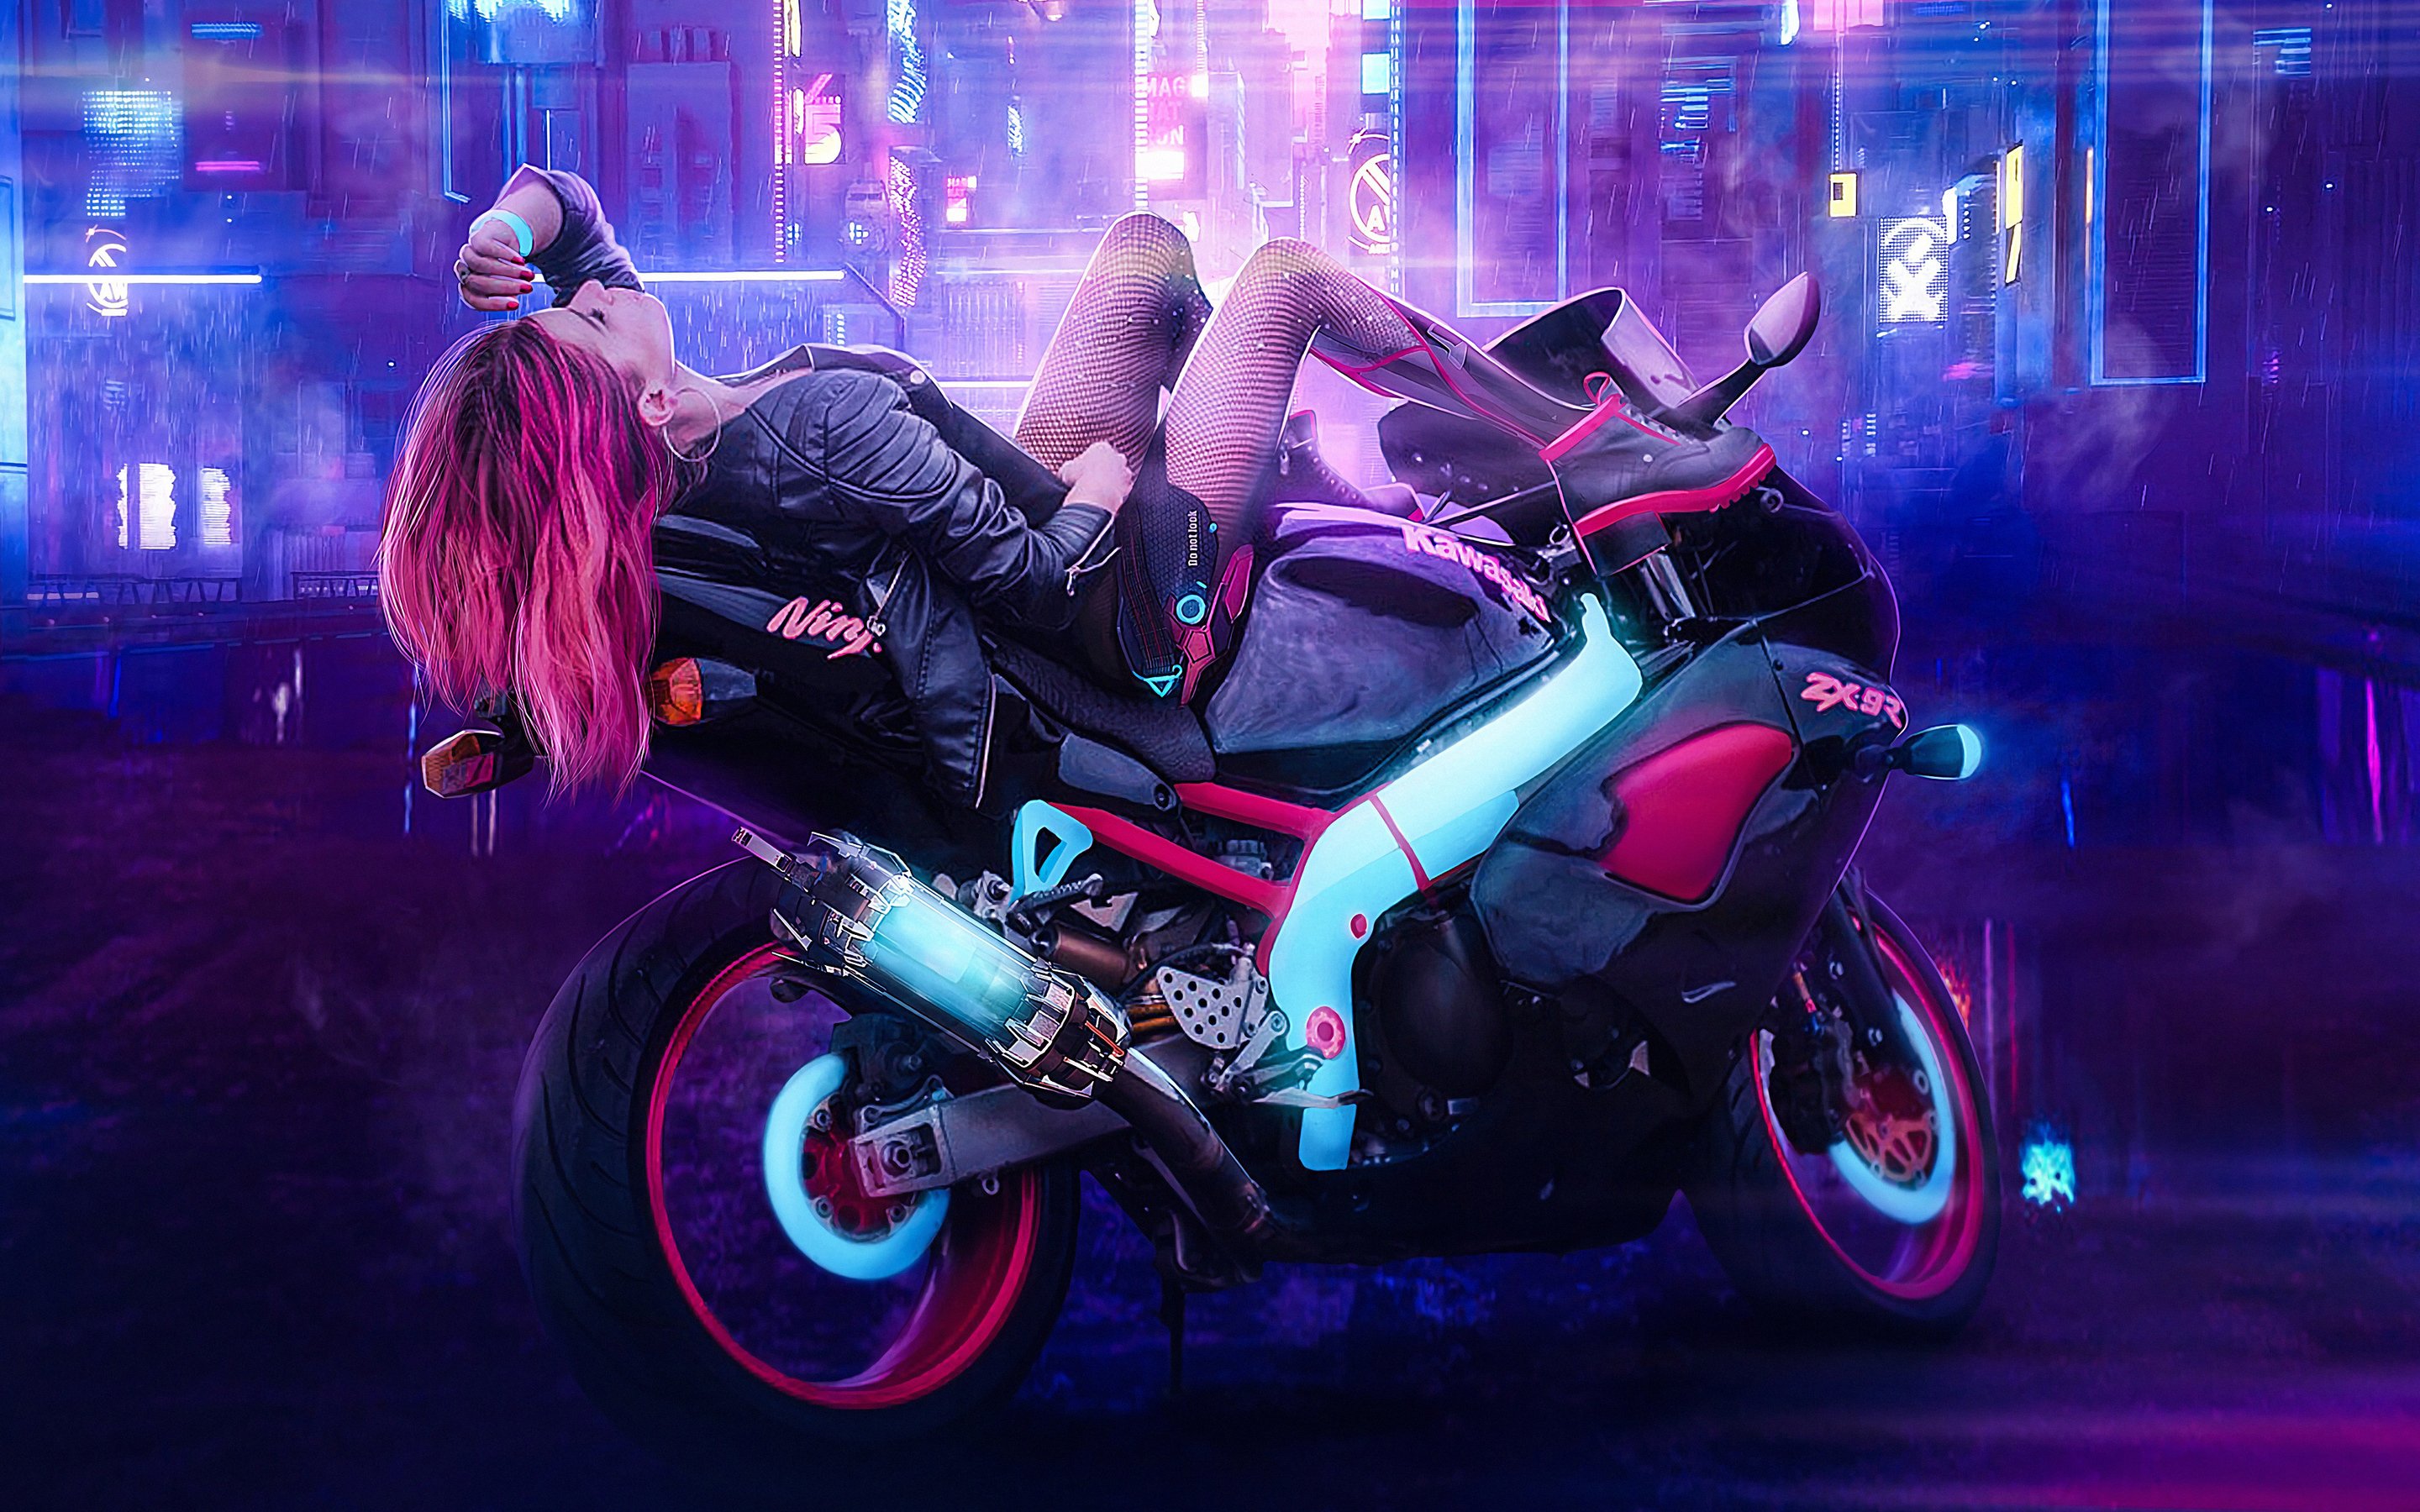 Cyberpunk Girl On Bike Macbook Pro Retina HD 4k Wallpaper, Image, Background, Photo and Picture